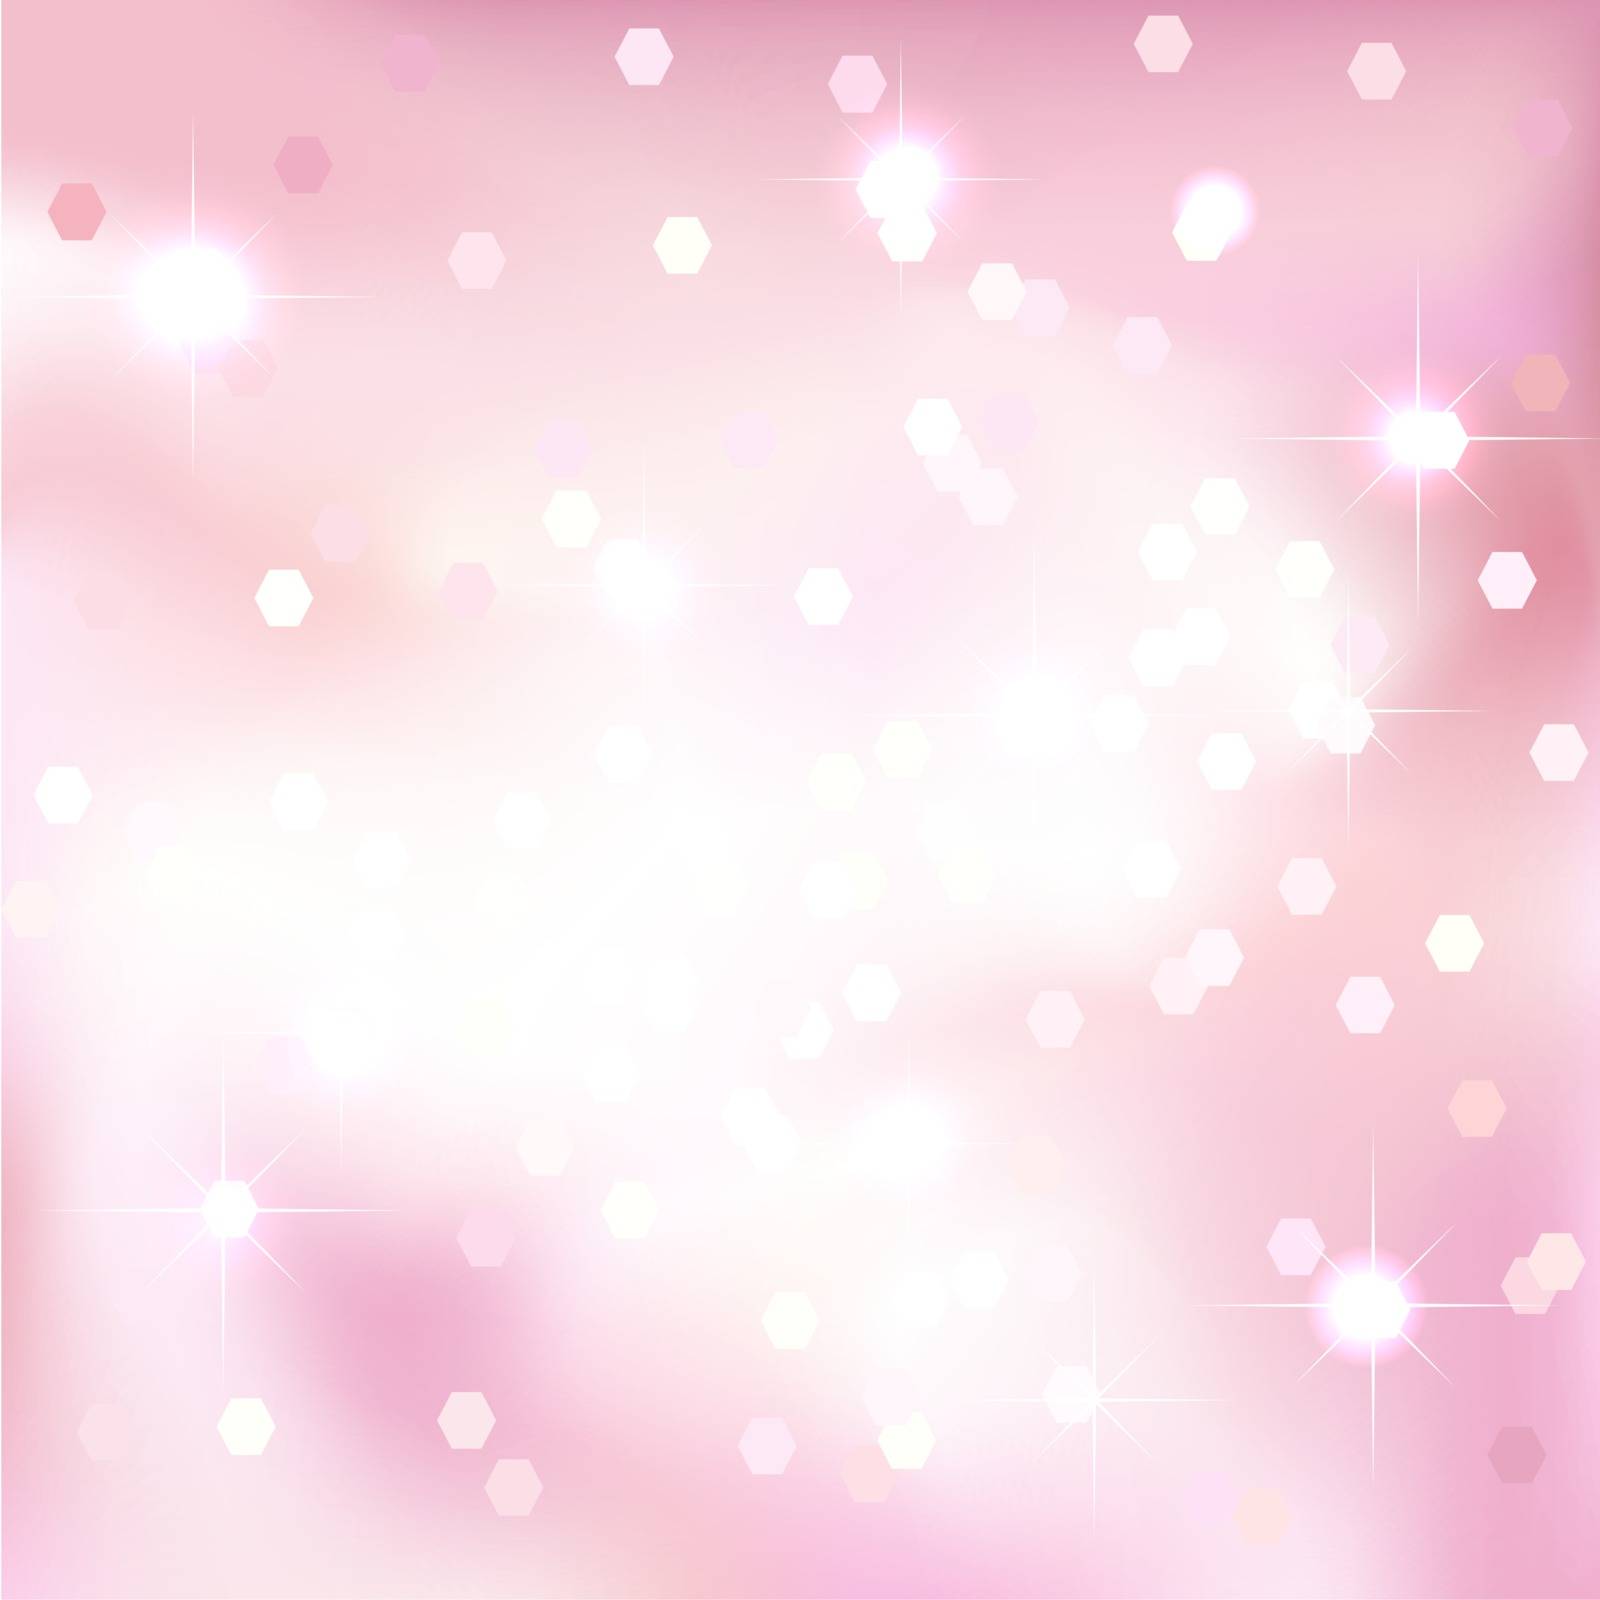 Bright light pink background. Festive design. Christmas style